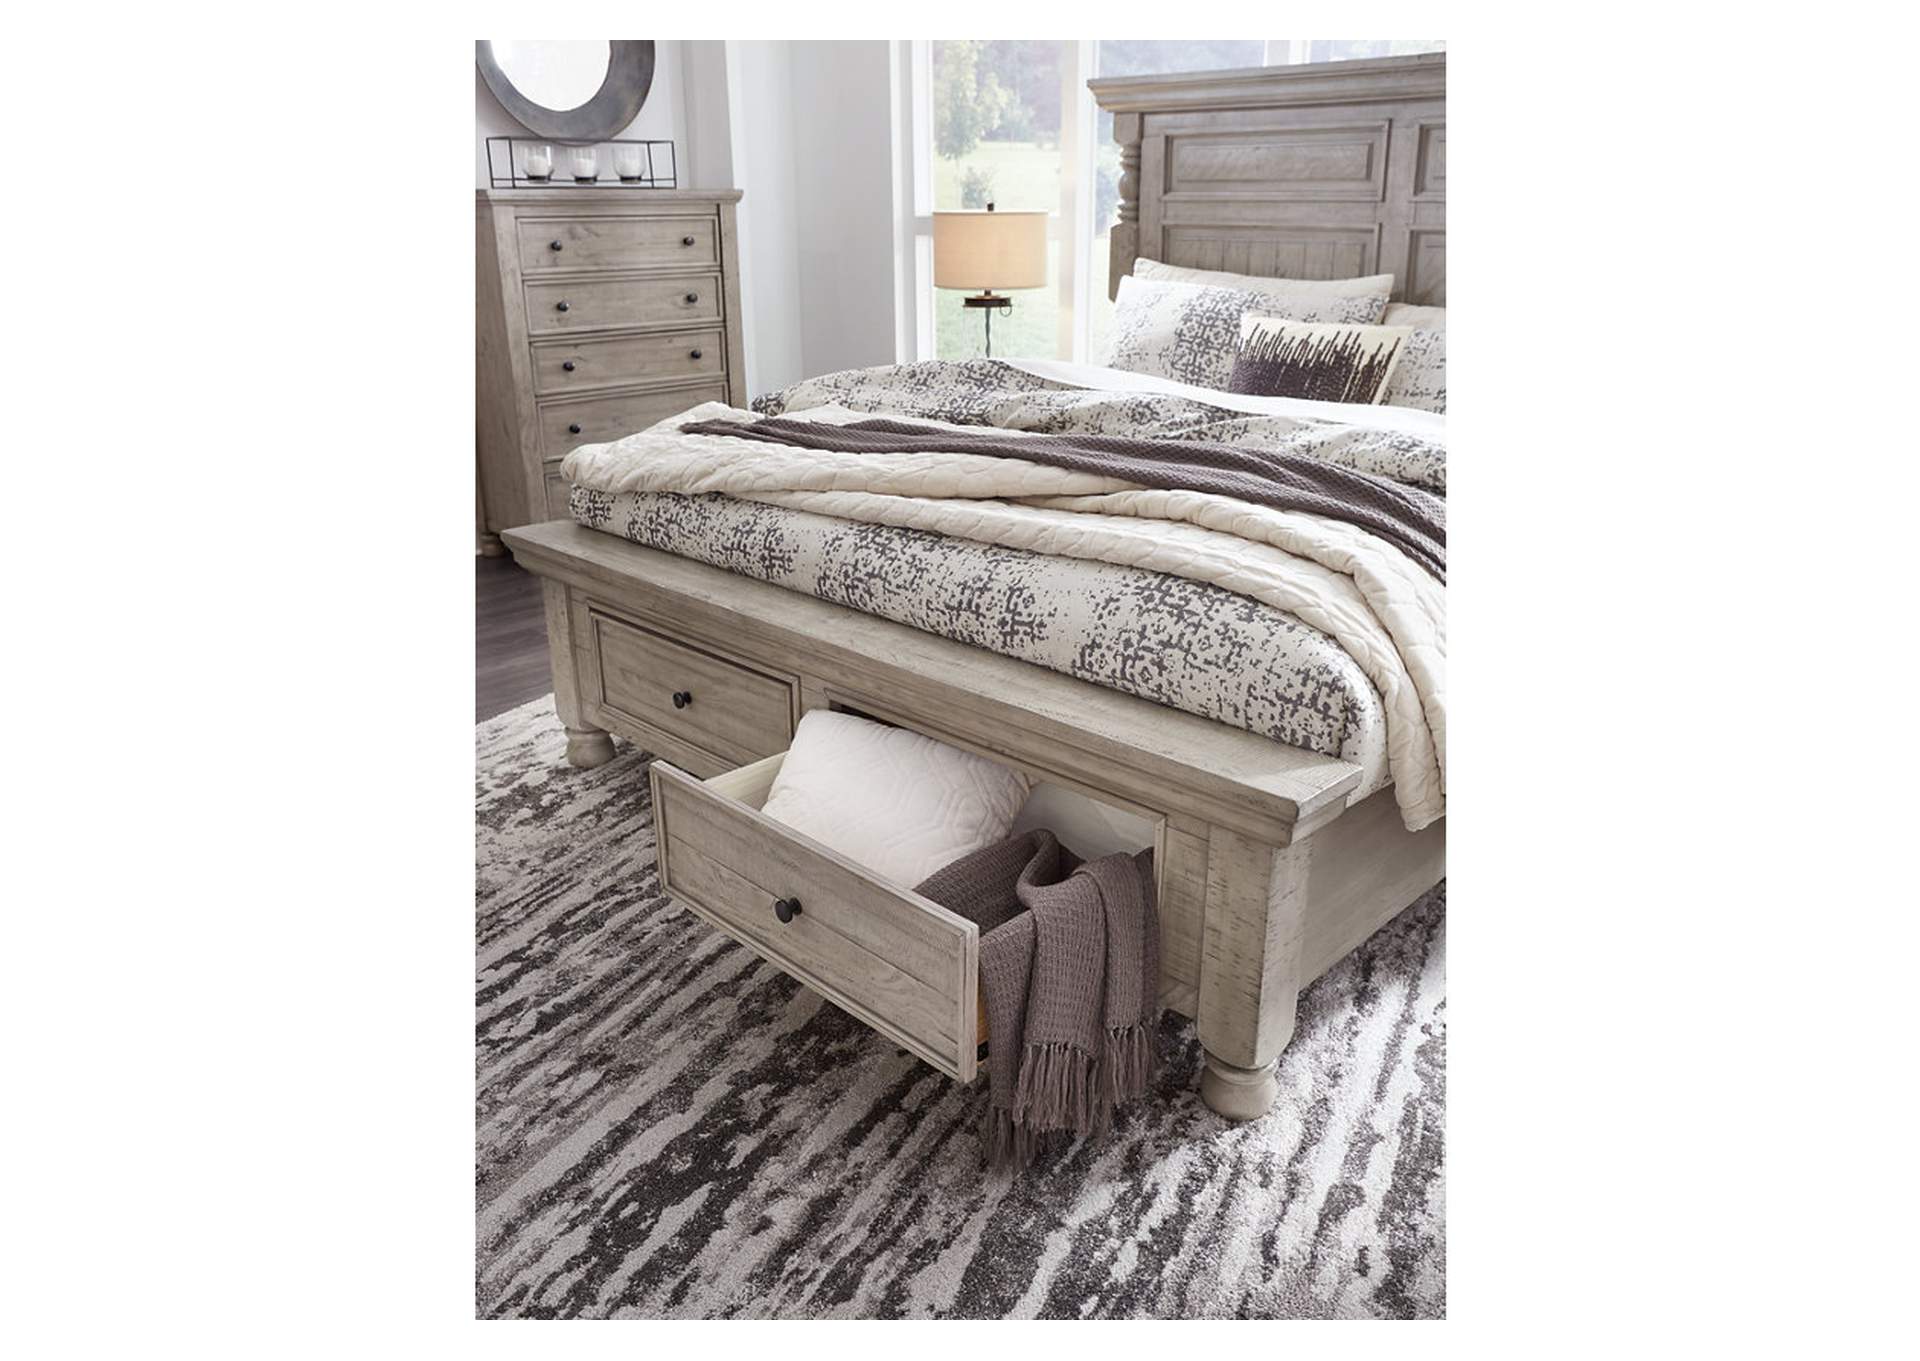 Harrastone California King Panel Bed with Mirrored Dresser,Millennium